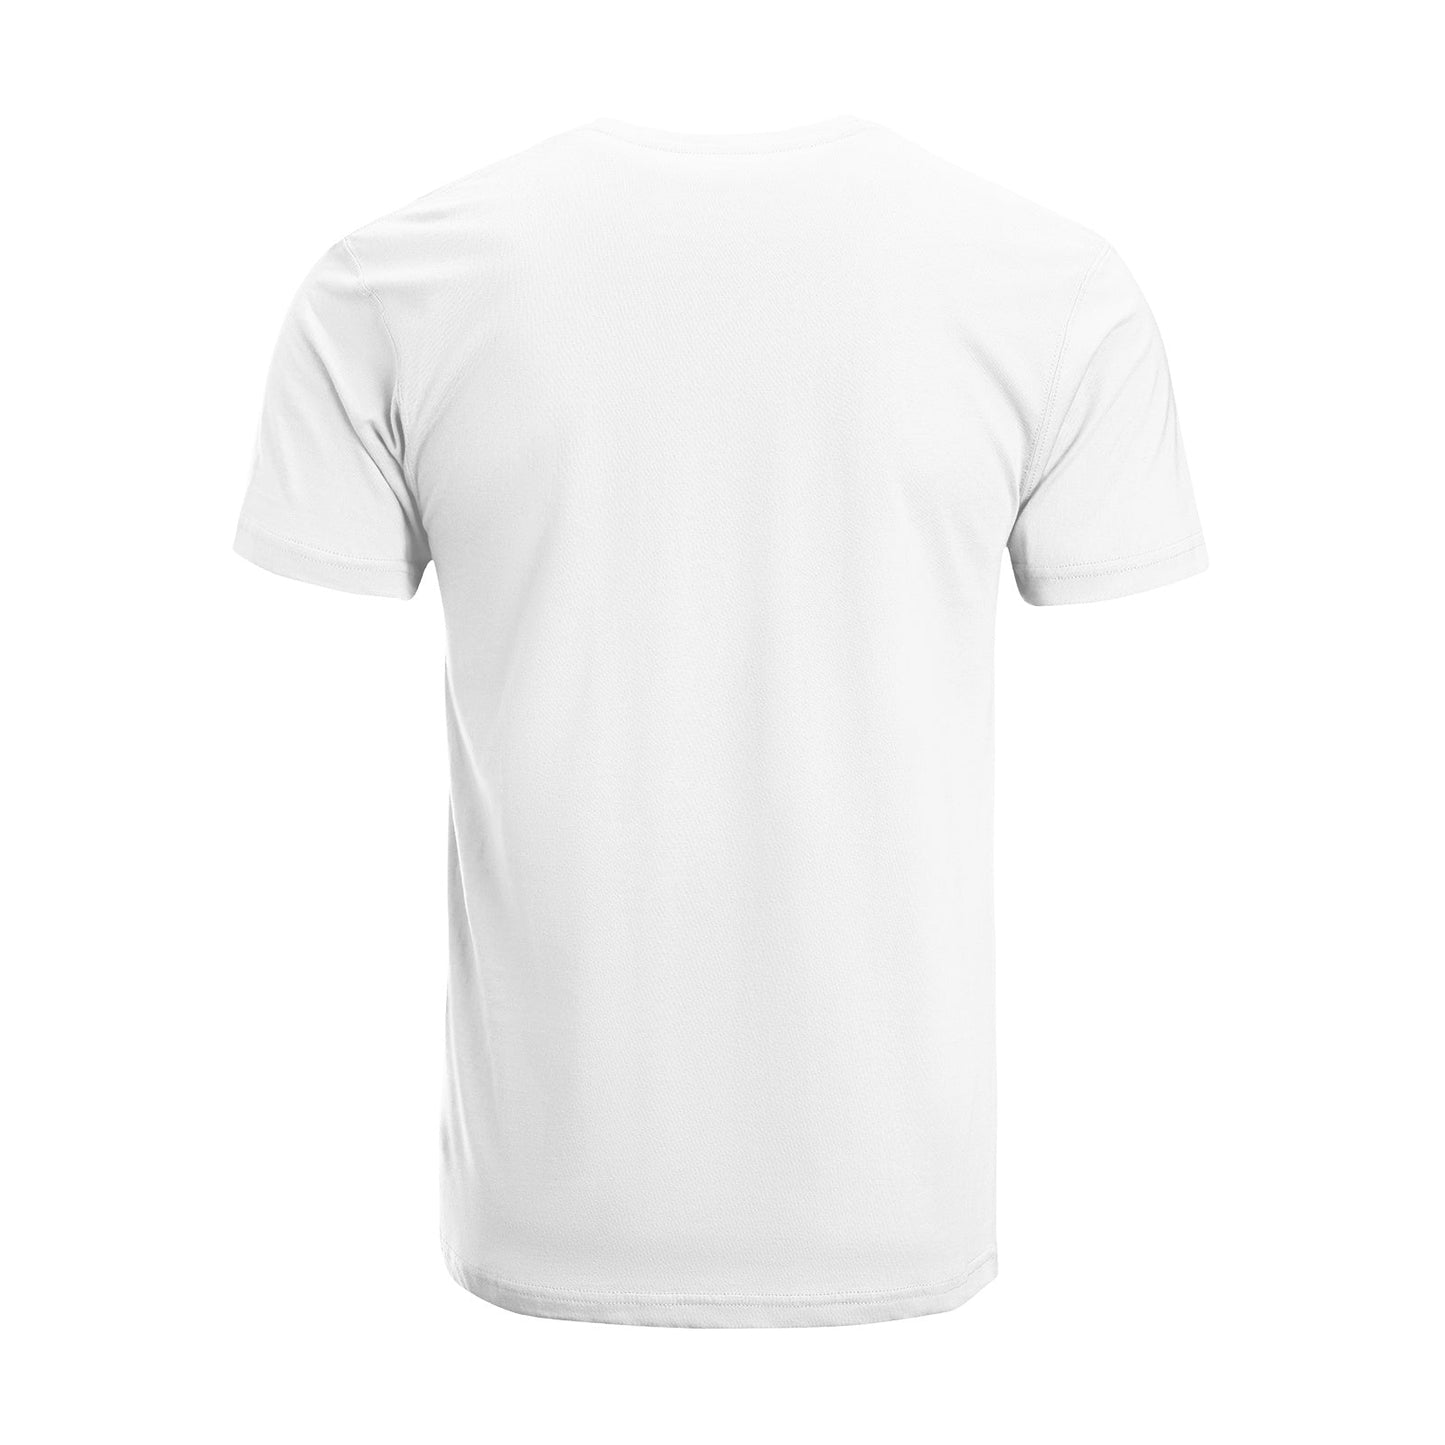 Unisex Short Sleeve Crew Neck Cotton Jersey T-Shirt MOM 37